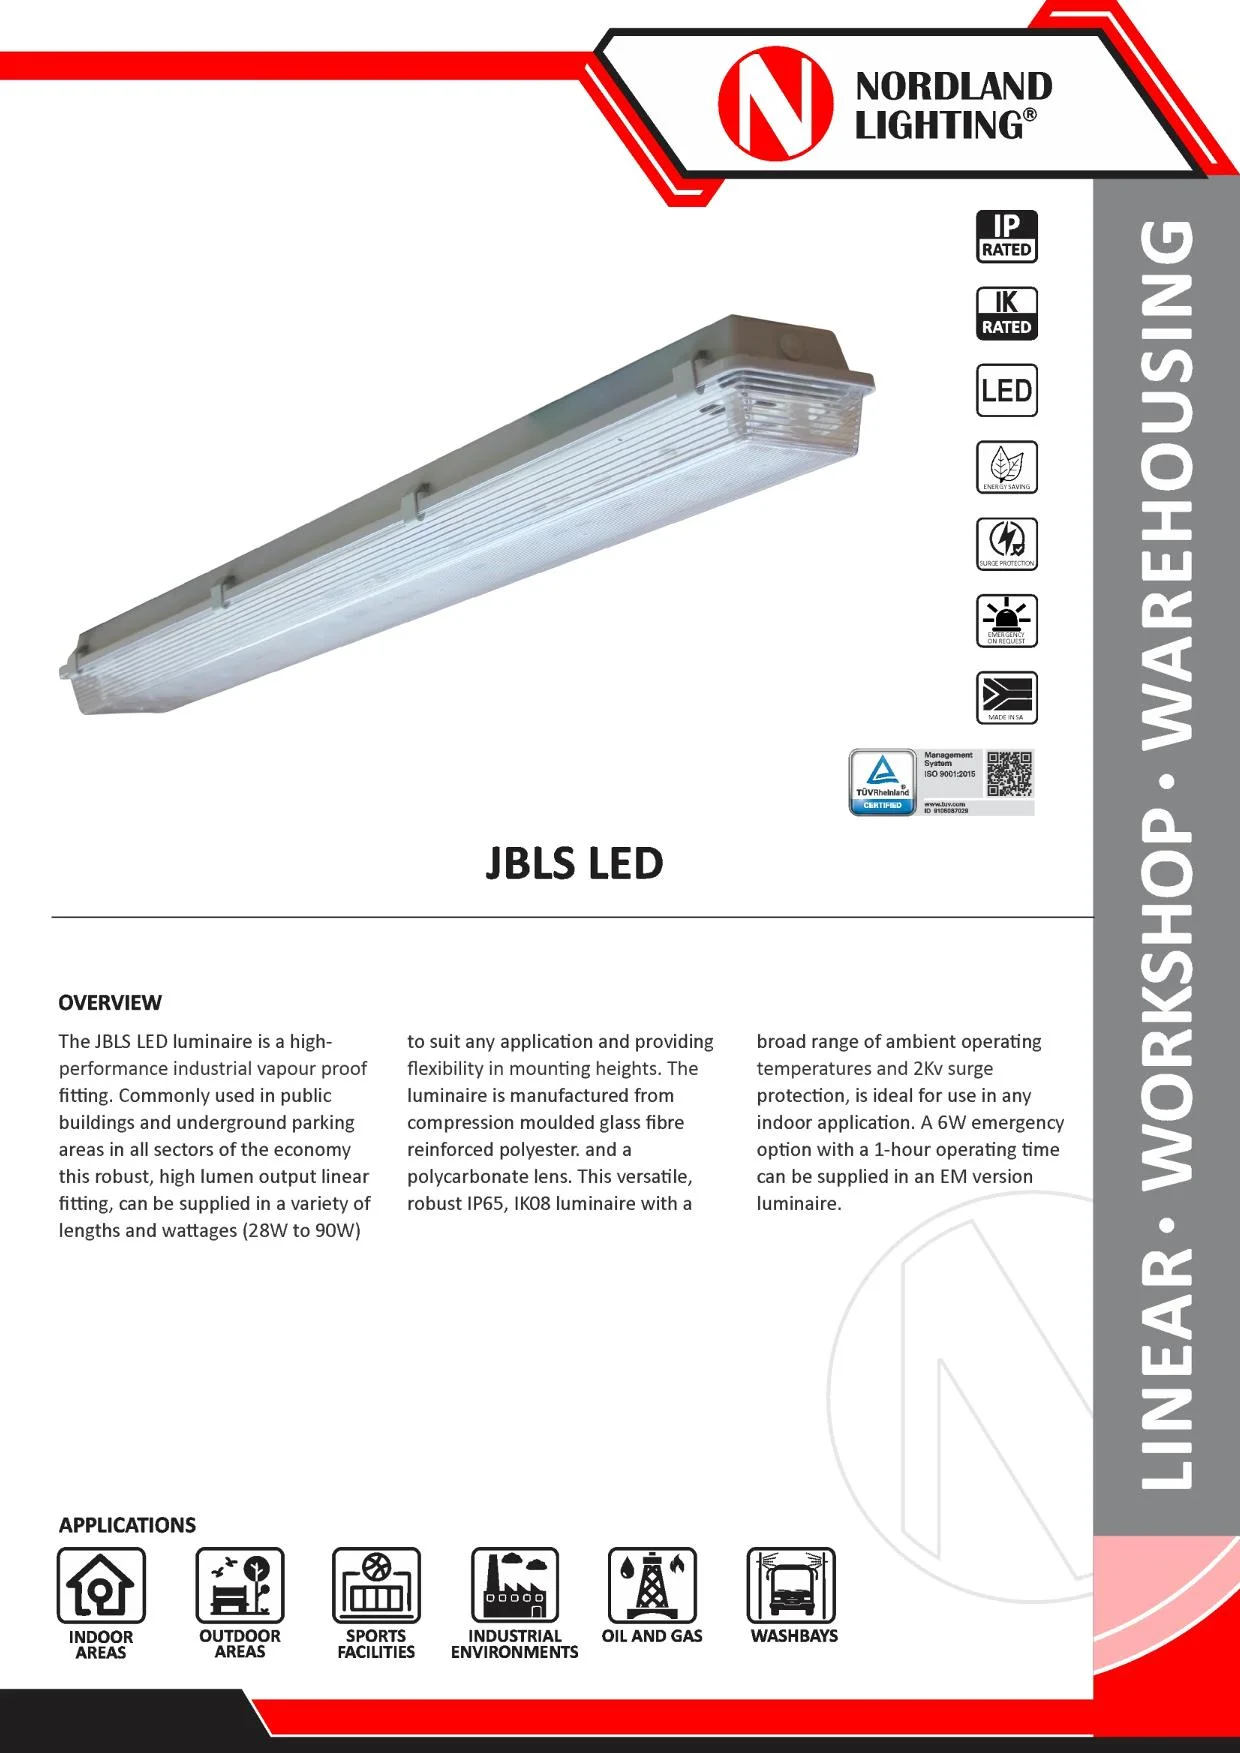 NL18 Nordland JBLS LED Vapour Proof Luminaire